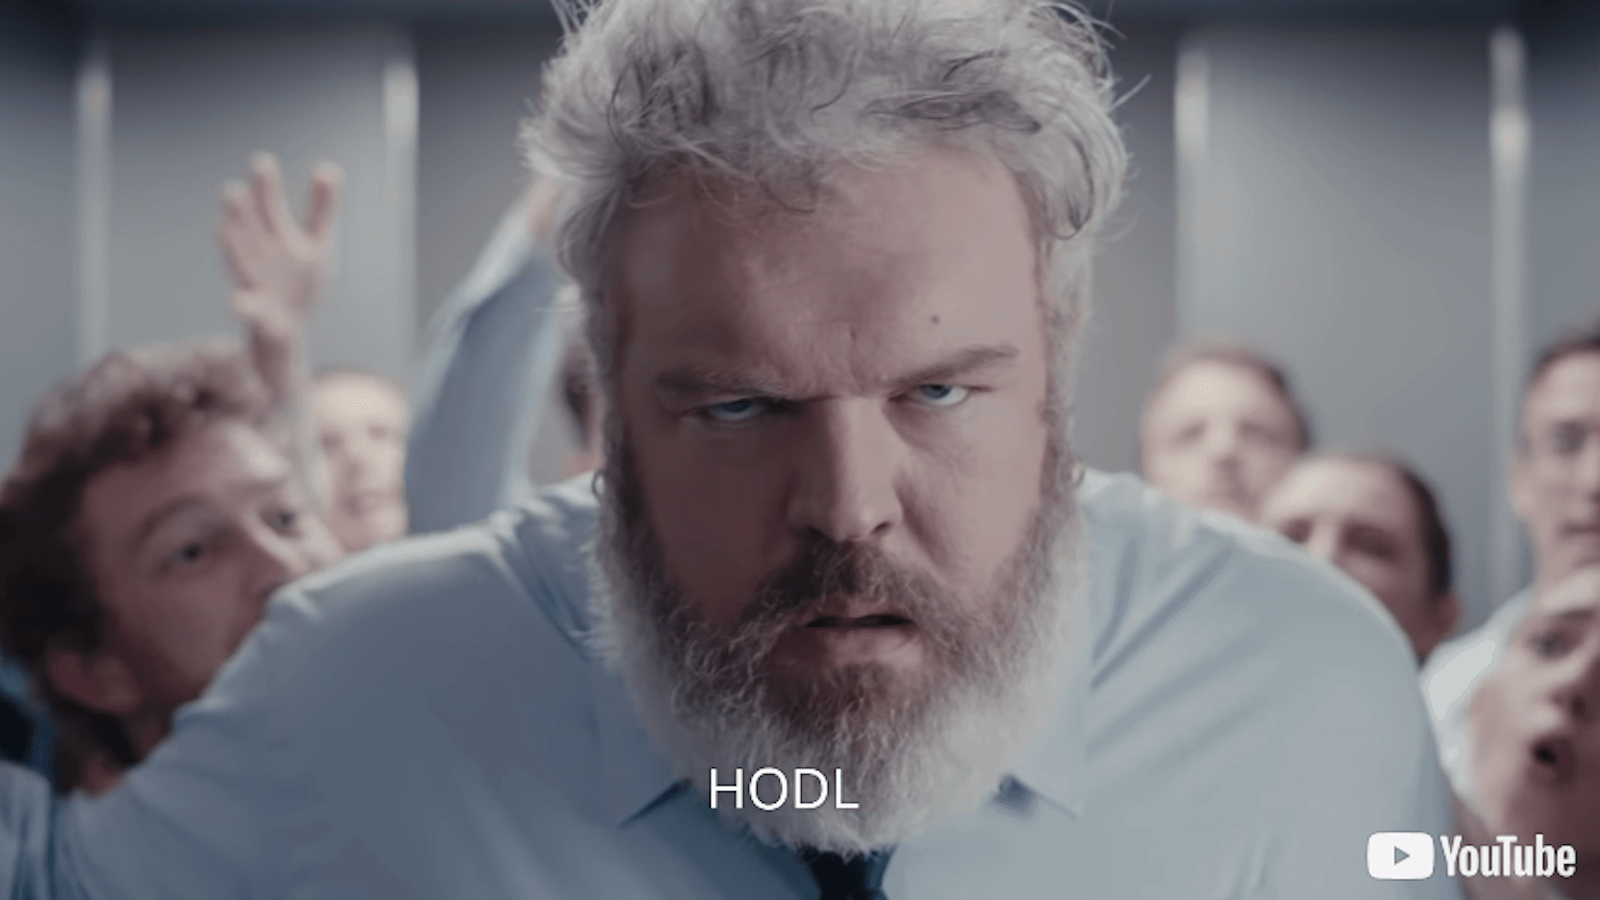 Game of Thrones’ Hodor Stars in eToro Crypto Investment Ad